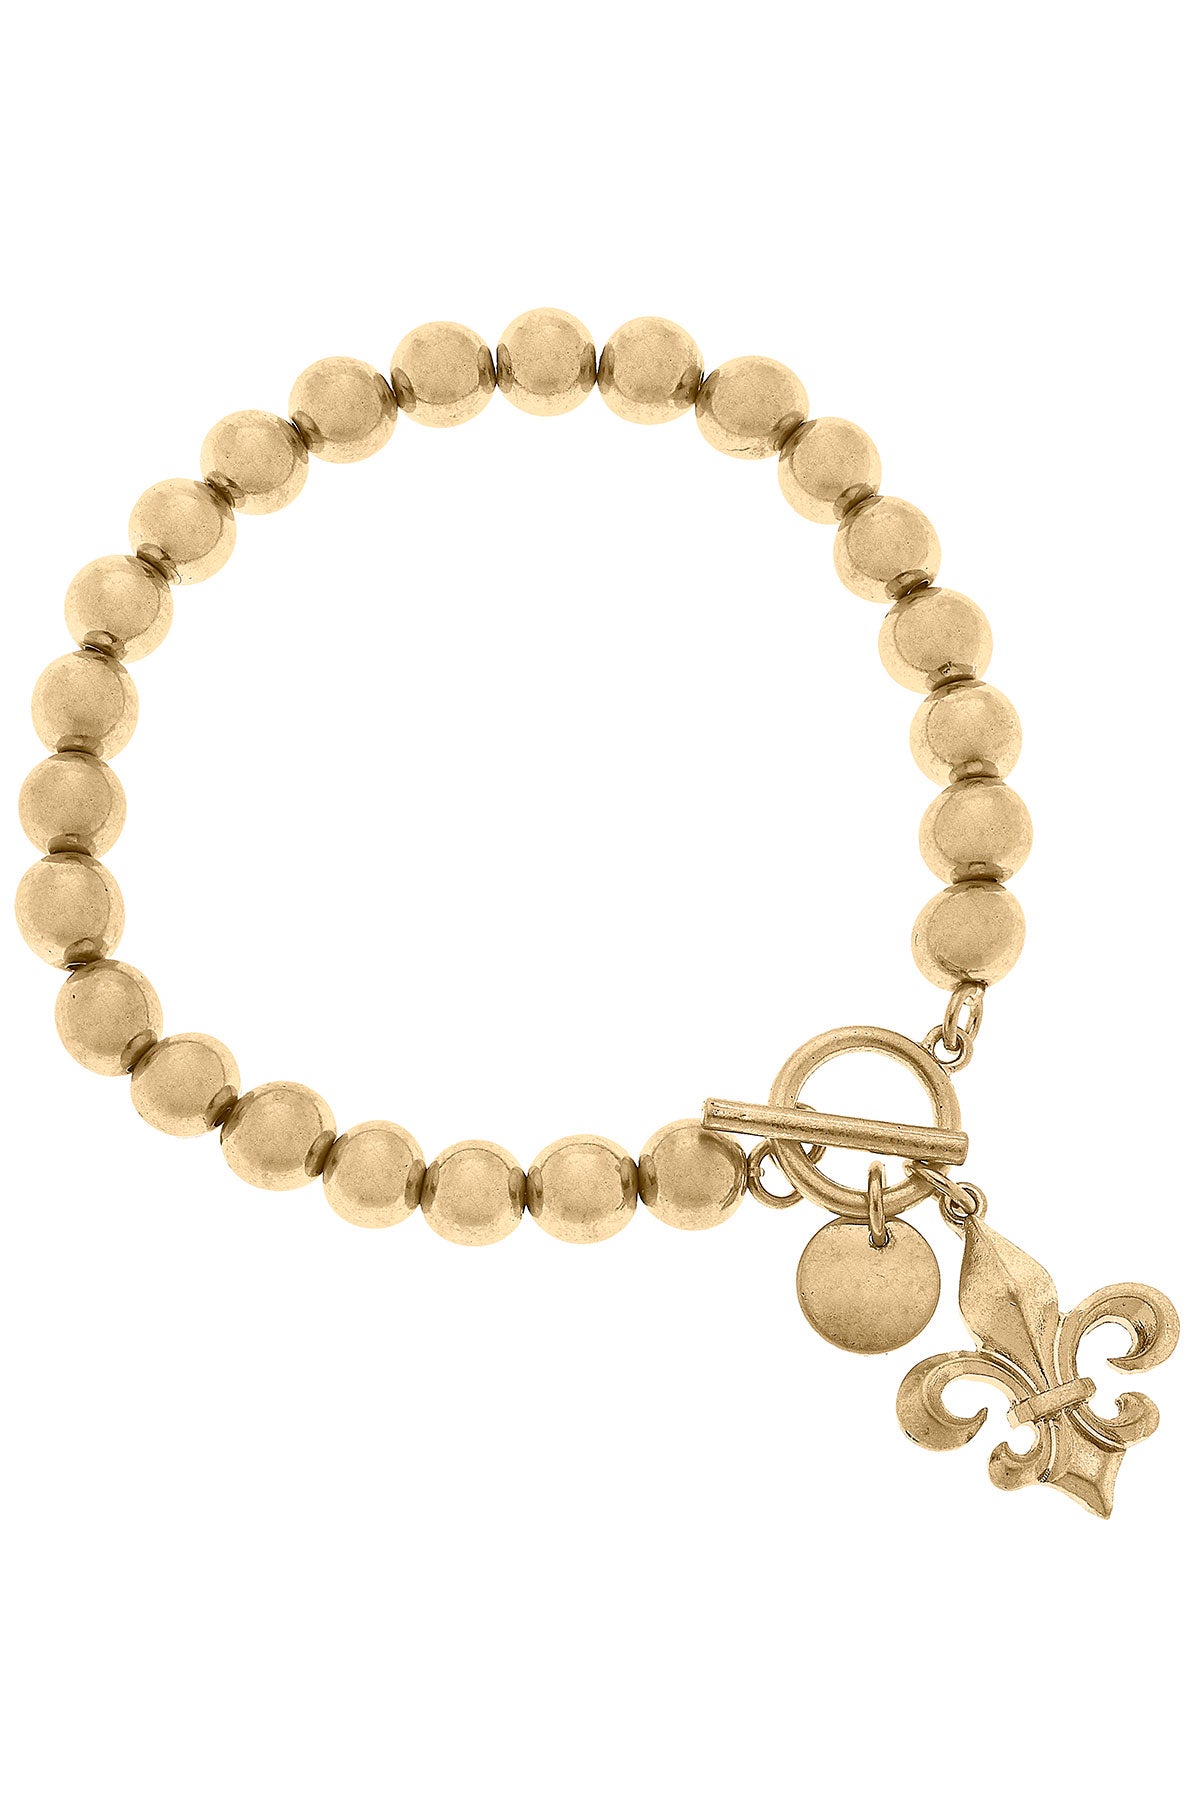 Lourdes Bourbon Fleur de Lis Charm Ball Bead T-Bar Bracelet in Worn Gold by CANVAS